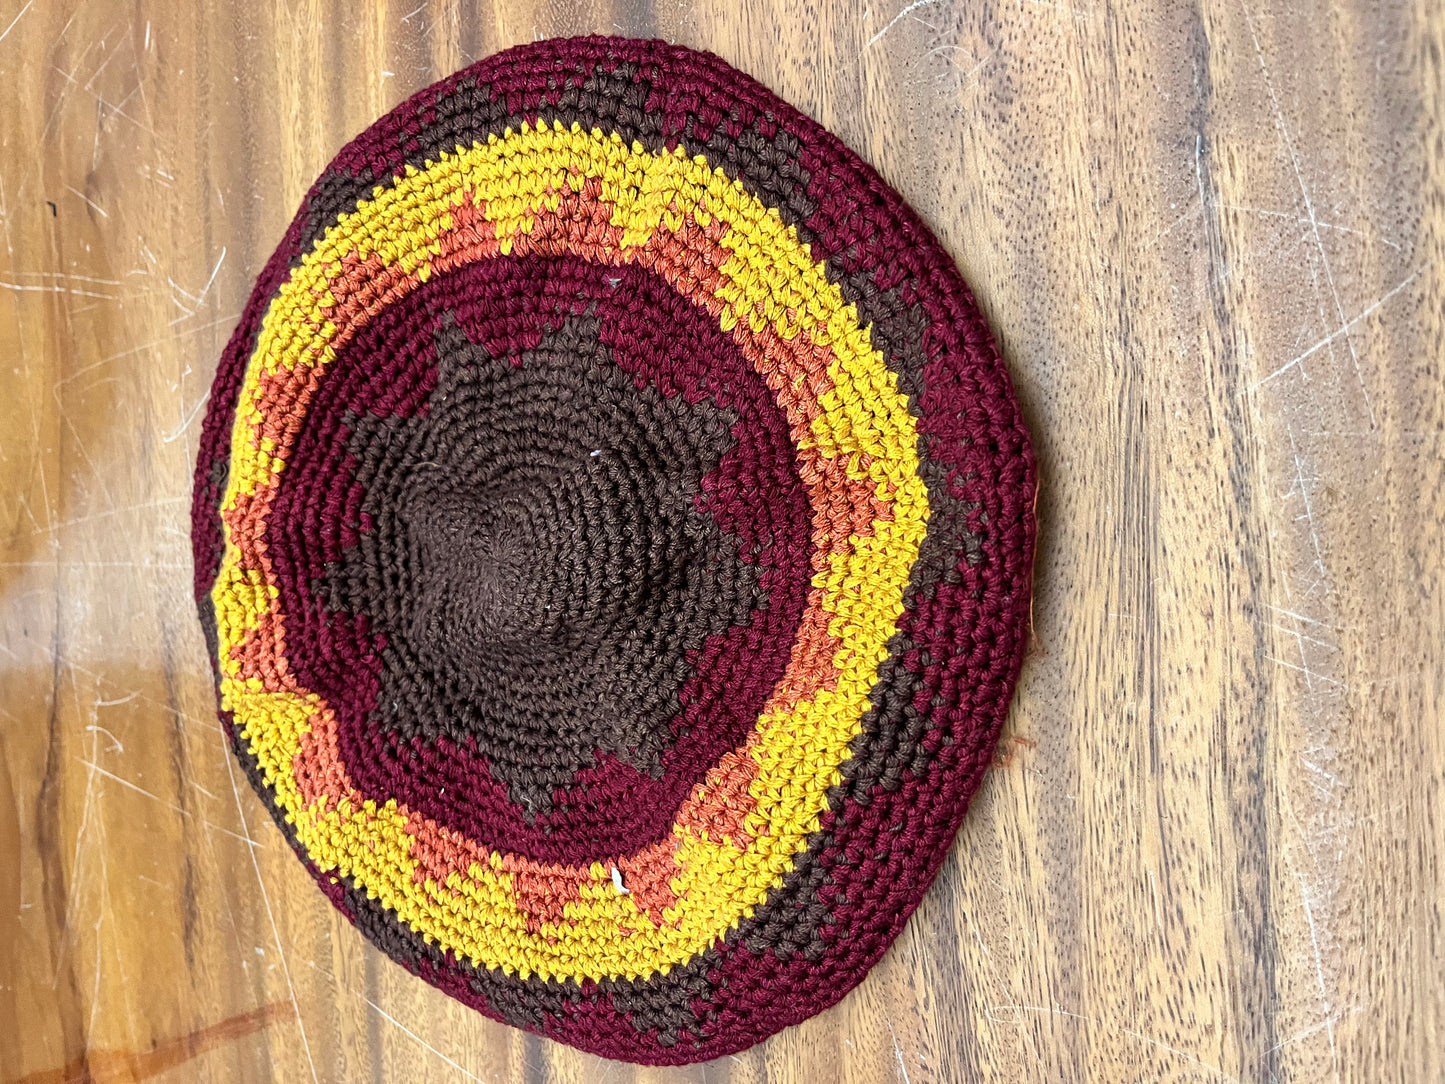 THE GET DOWN: Ezekiel’s Rastafarian Hat Collection